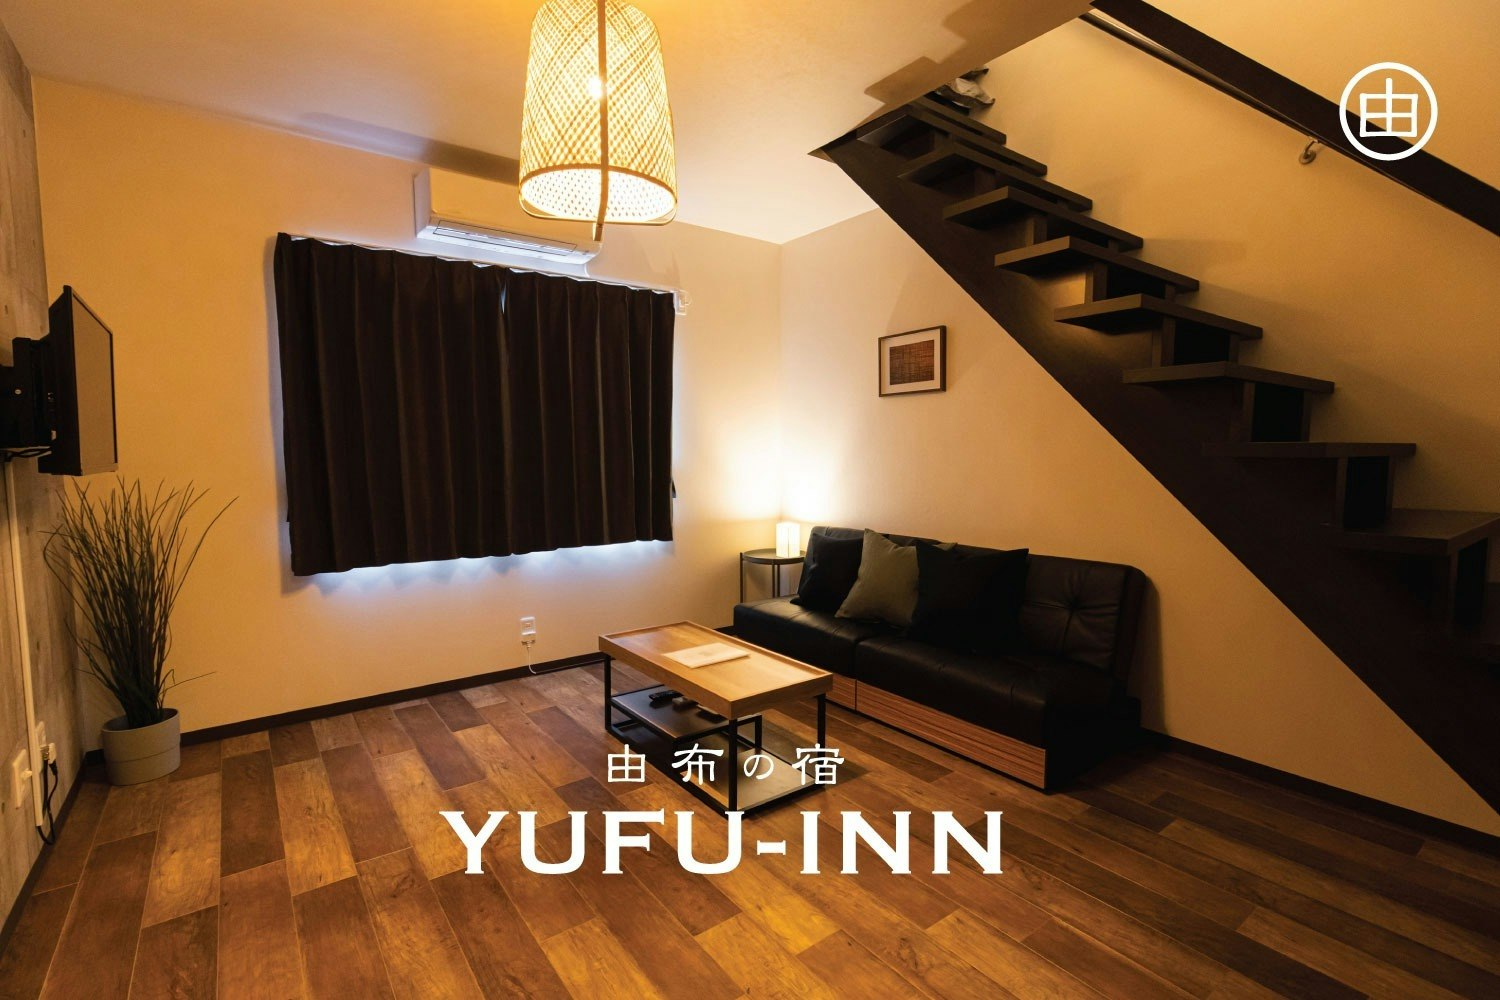 YUFU-INN FUJI SUITE*藤